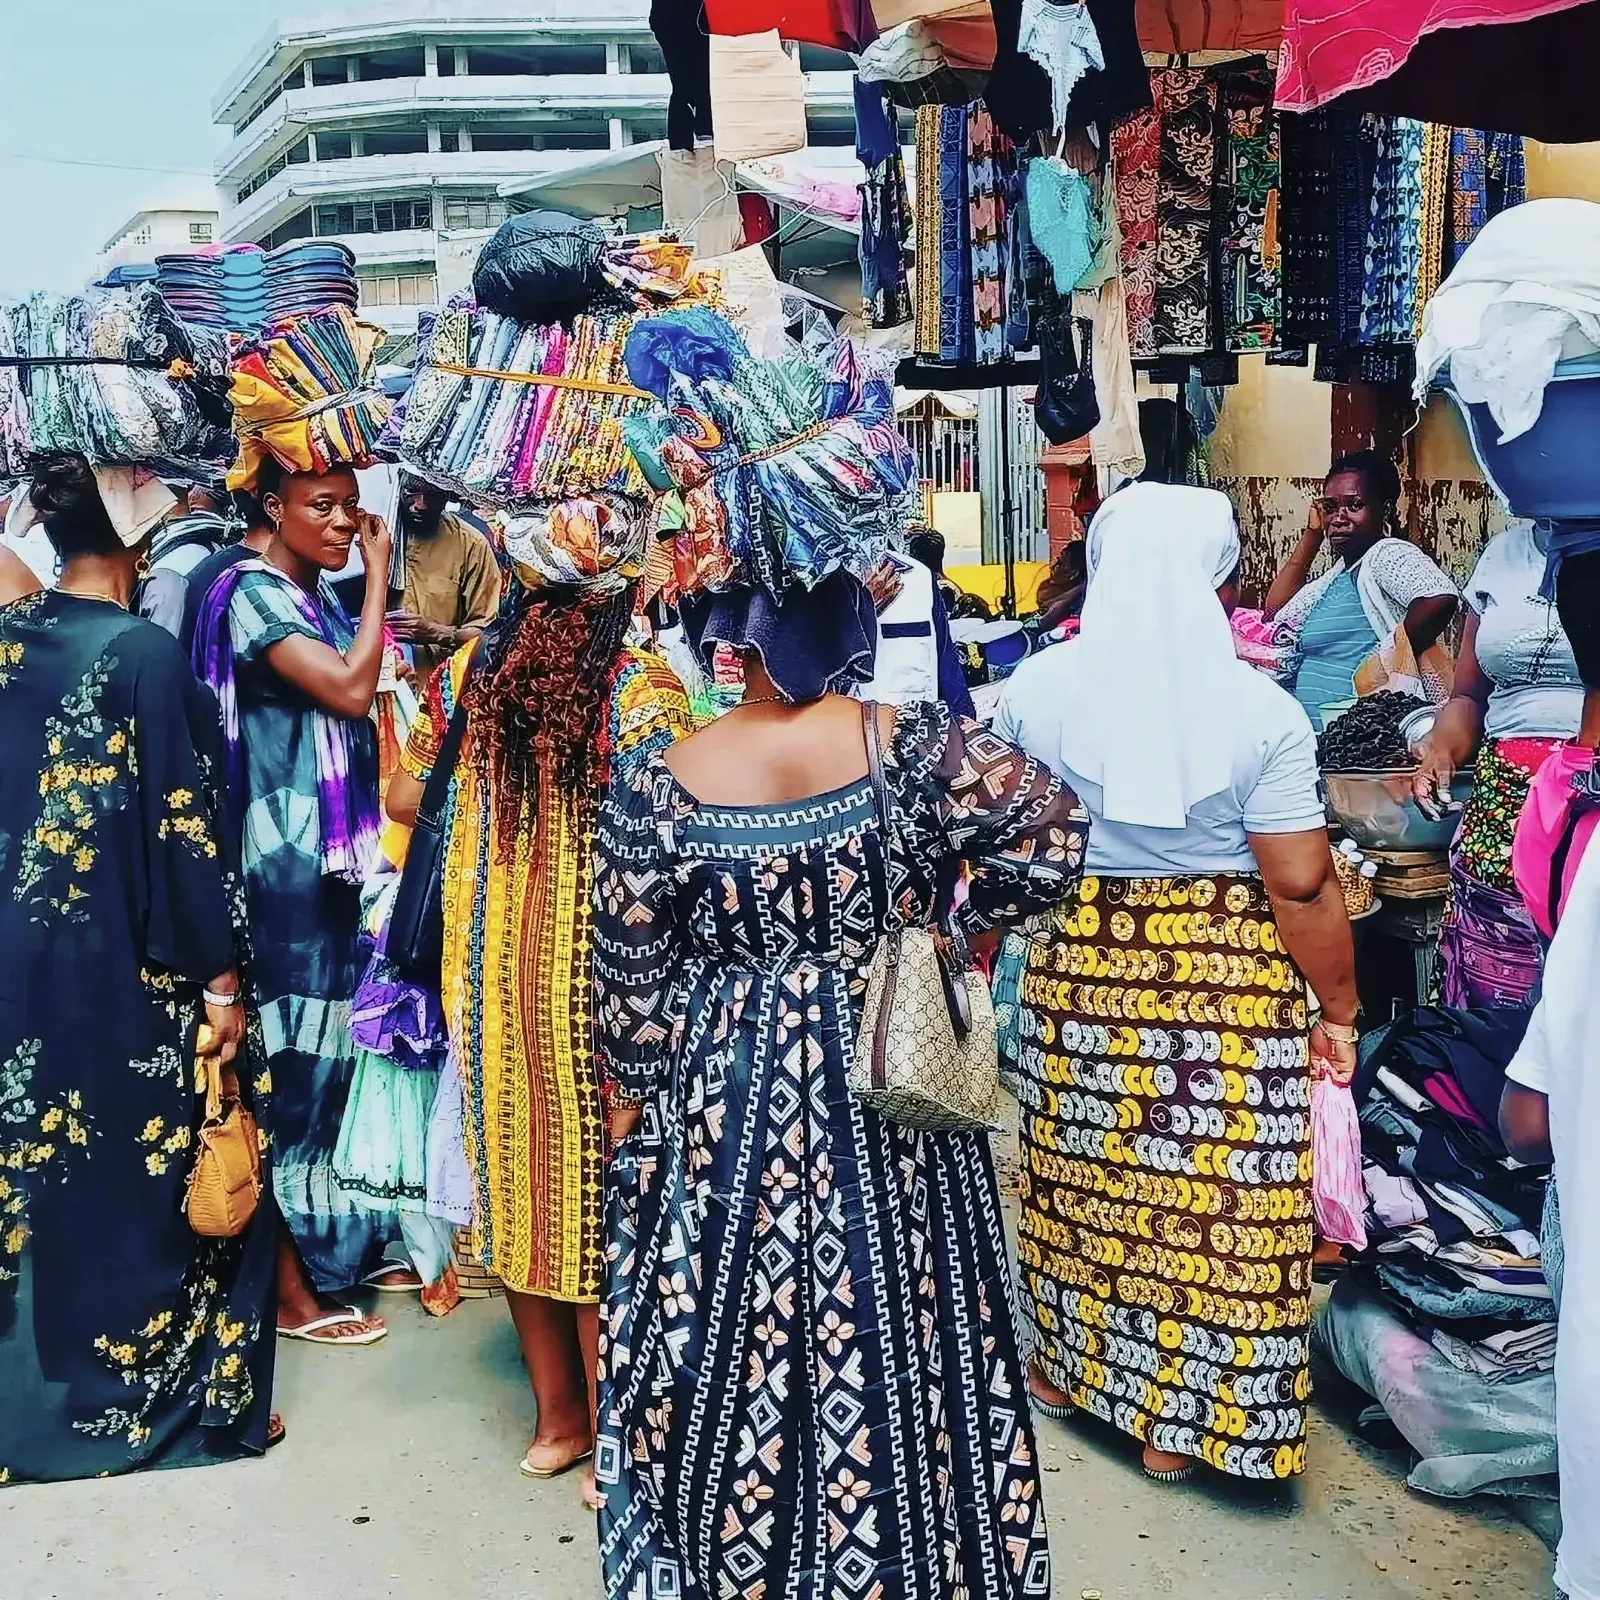 Colorful scene at a bustling flea market in Togo